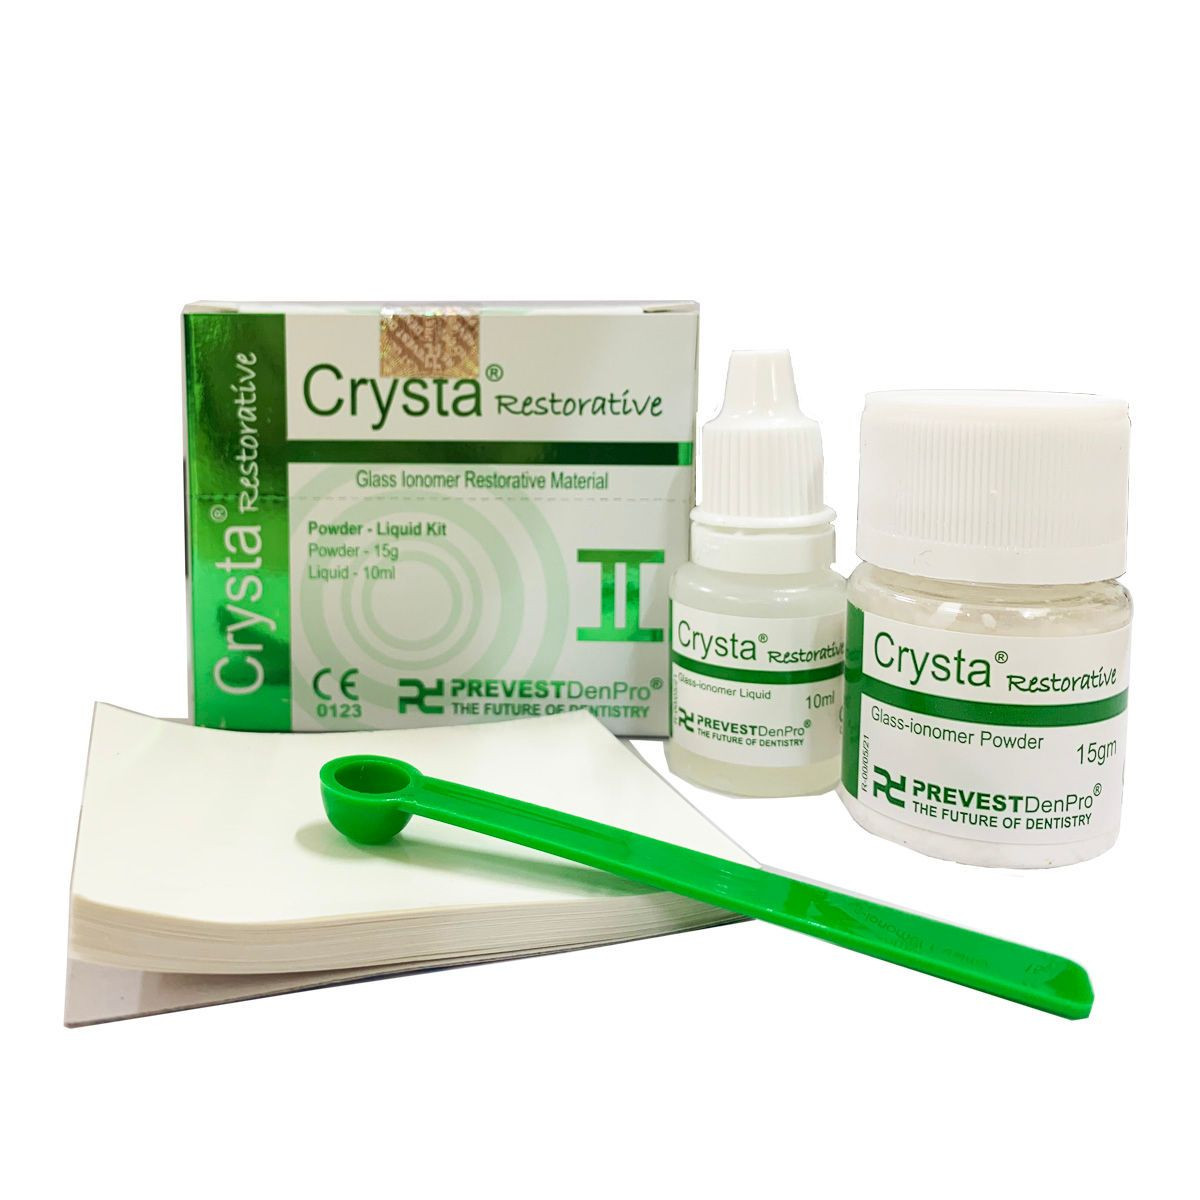 Prevest Denpro Crysta Restorative Powder 15gm Liquid 10ml